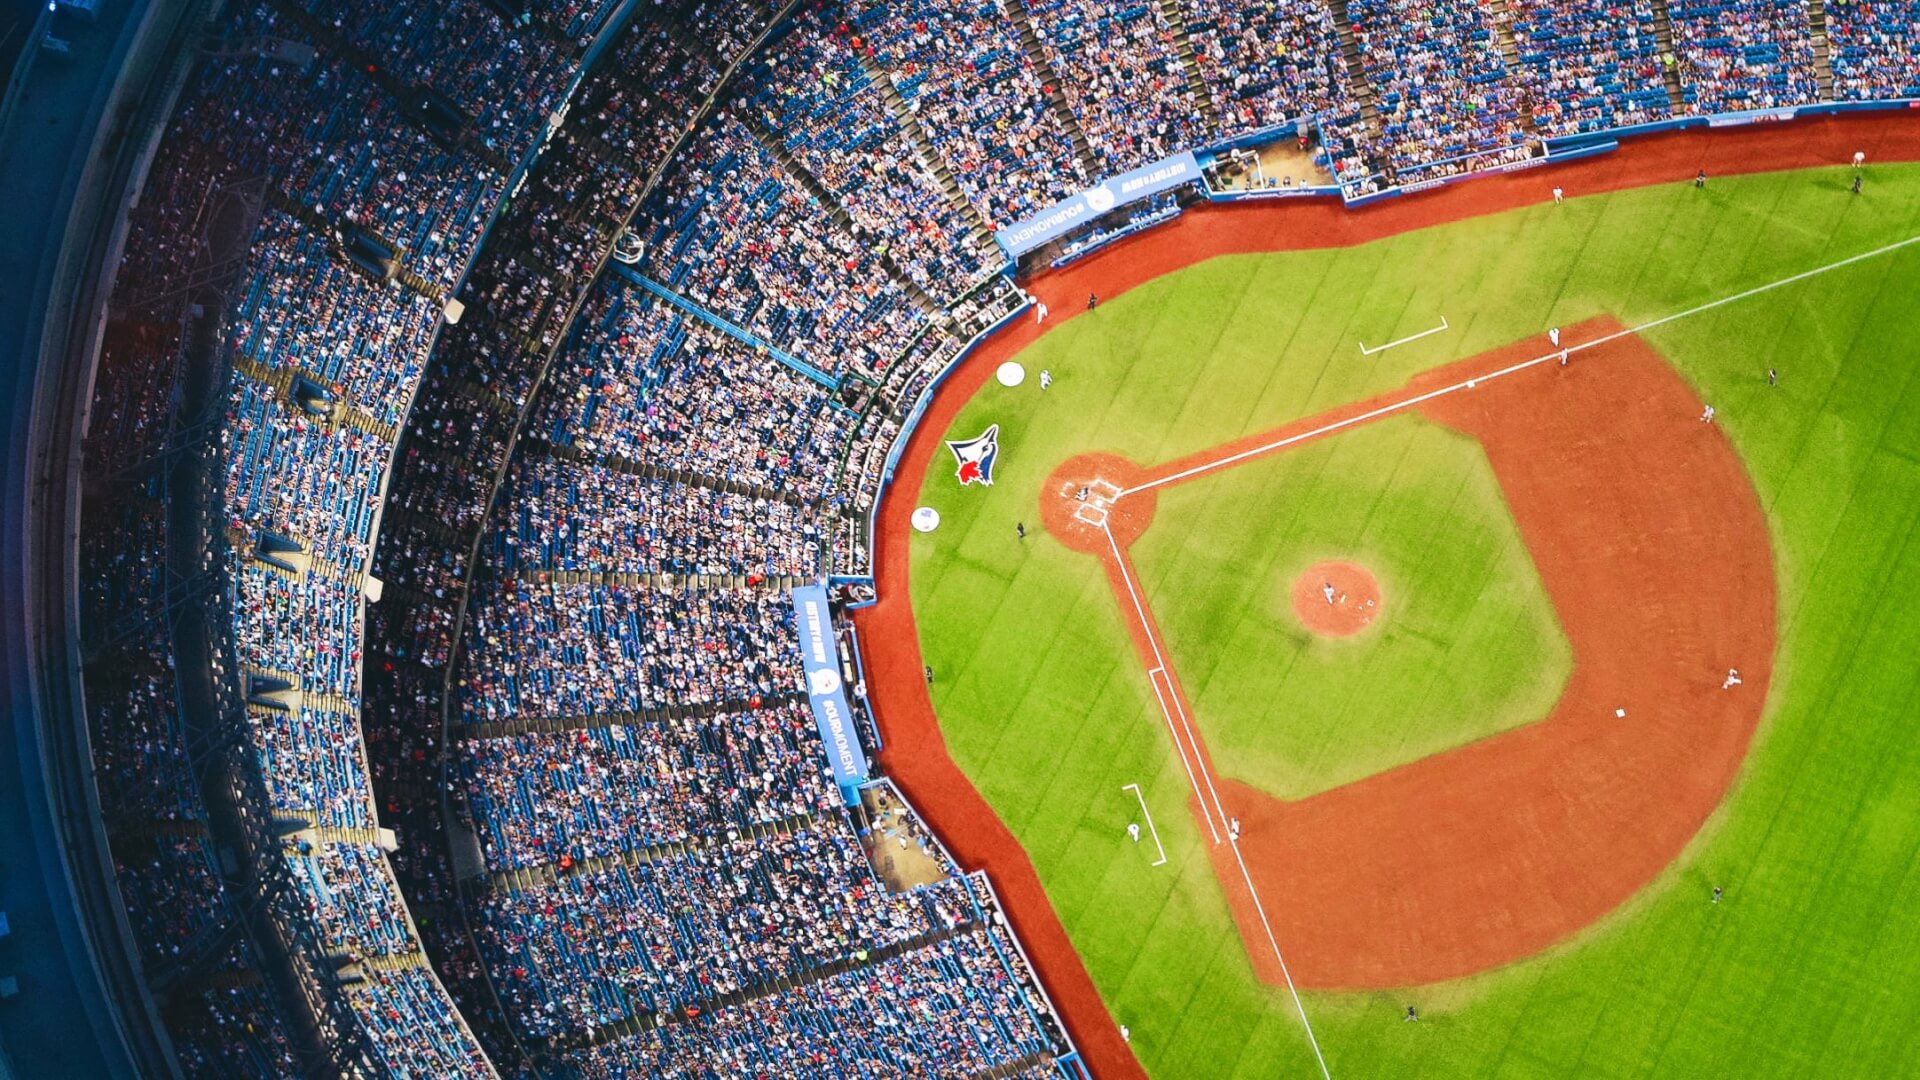 high overhead view of a full baseball stadium